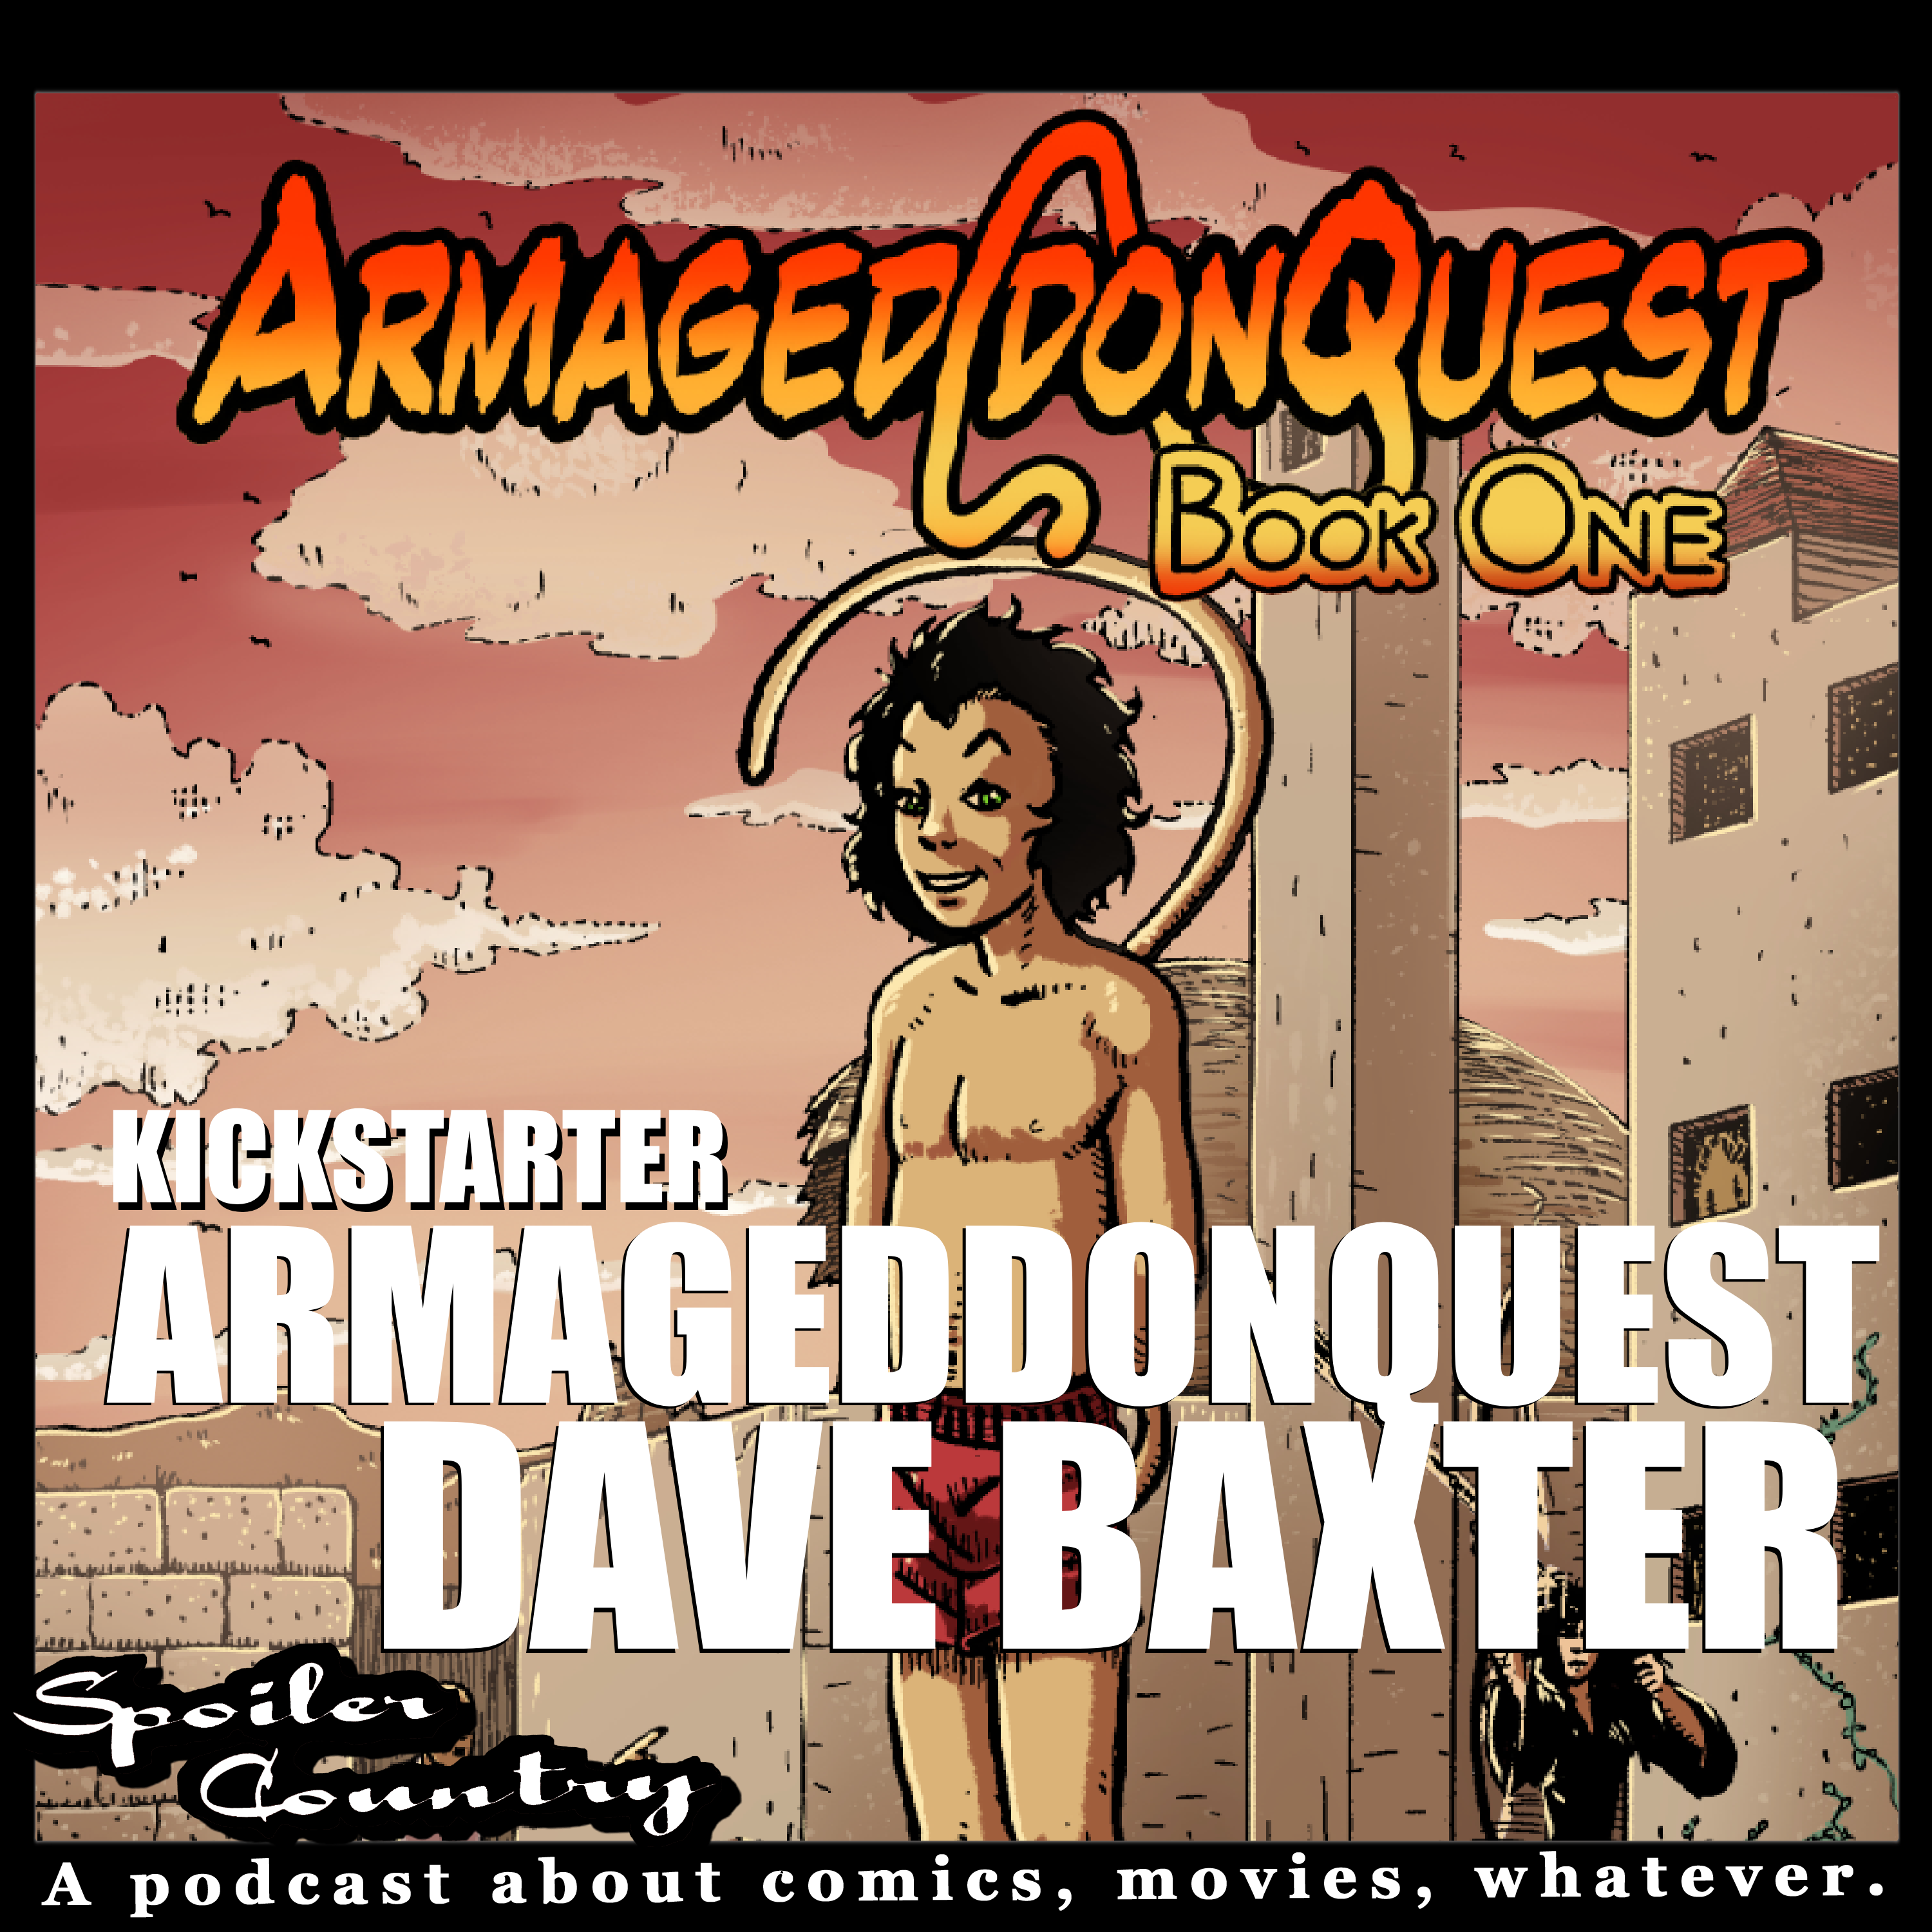 Kickstarter Armageddonquest Book One